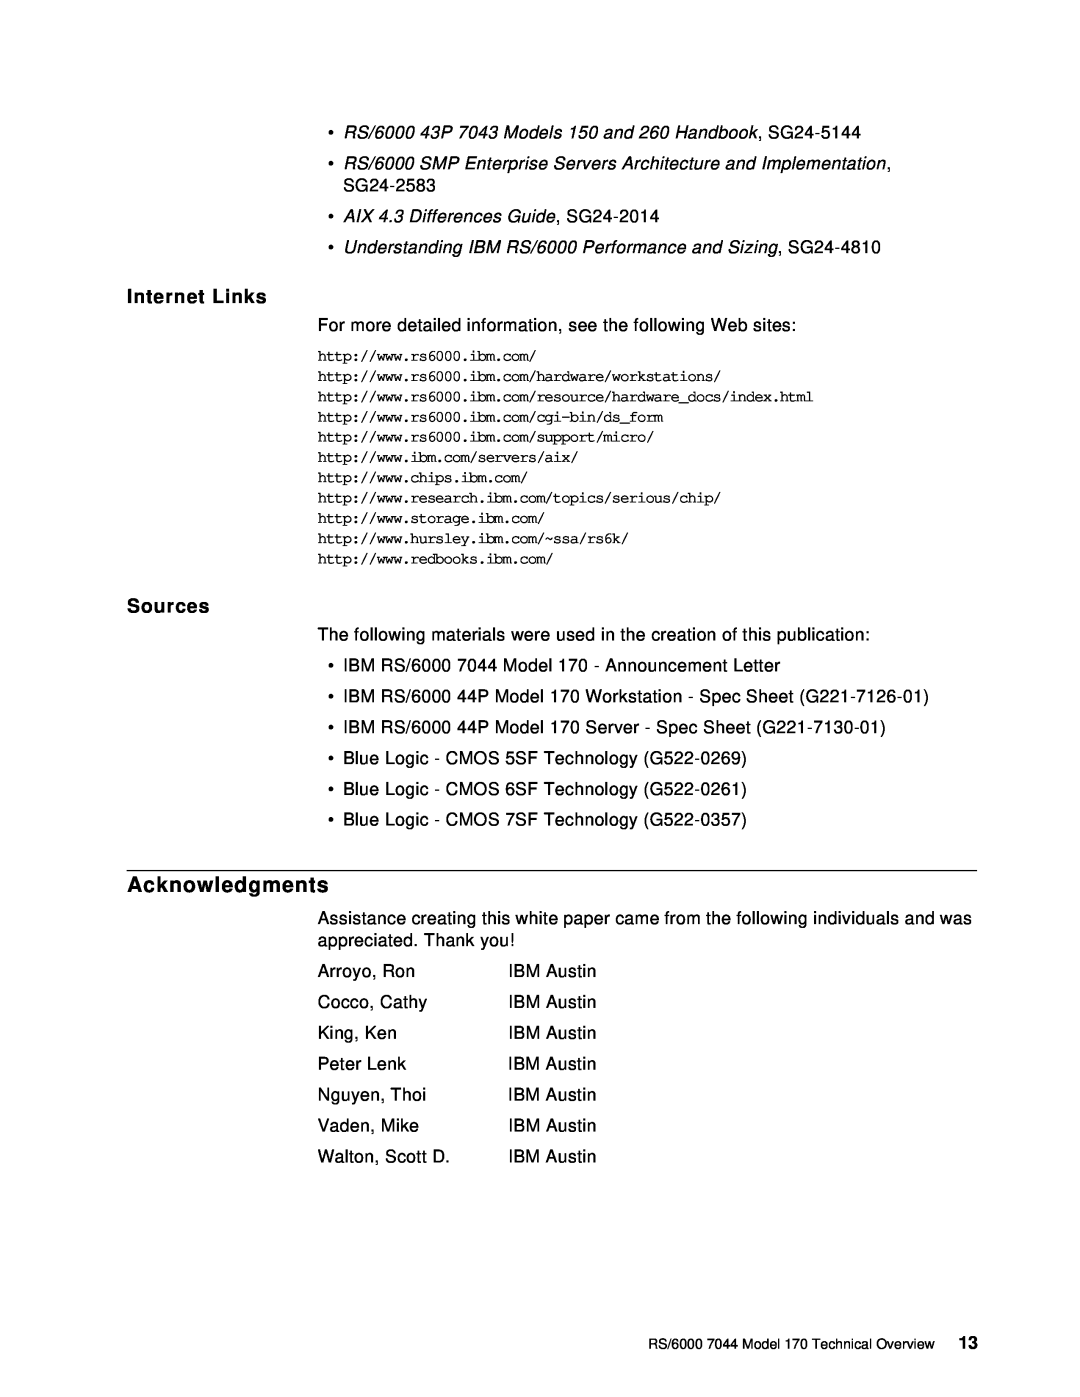 IBM 170 manual Acknowledgments, Internet Links, Sources, RS/6000 43P 7043 Models 150 and 260 Handbook, SG24-5144 